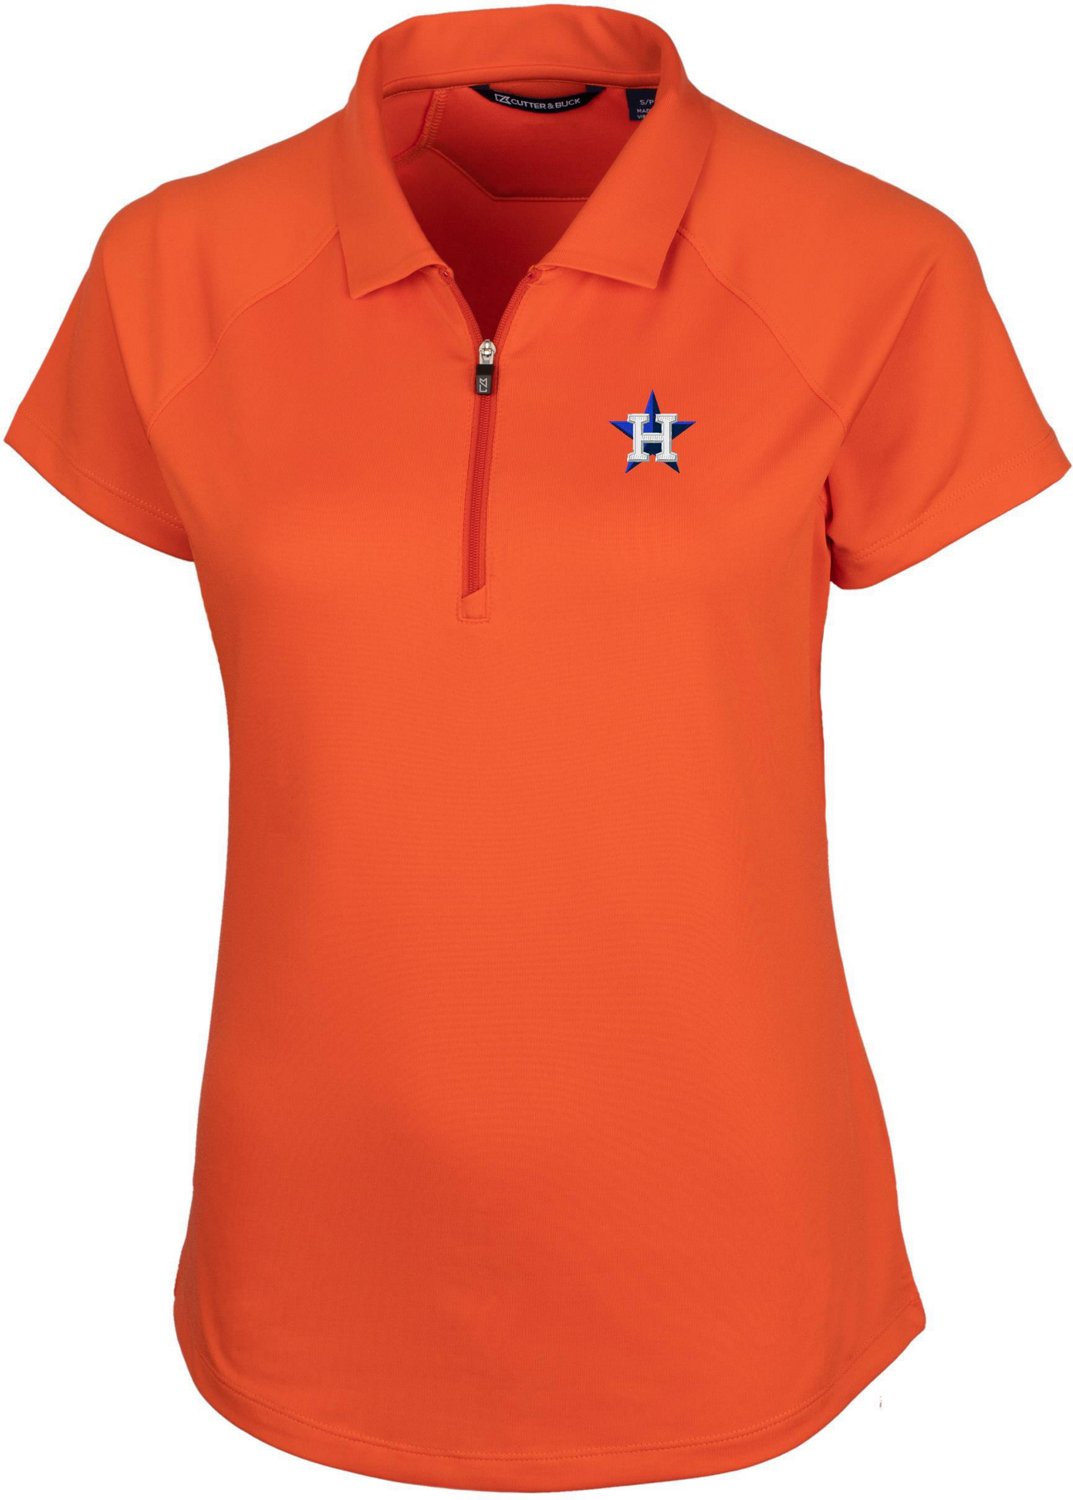 Cutter & Buck Women's Houston Astros Forge Short Sleeve Polo Shirt